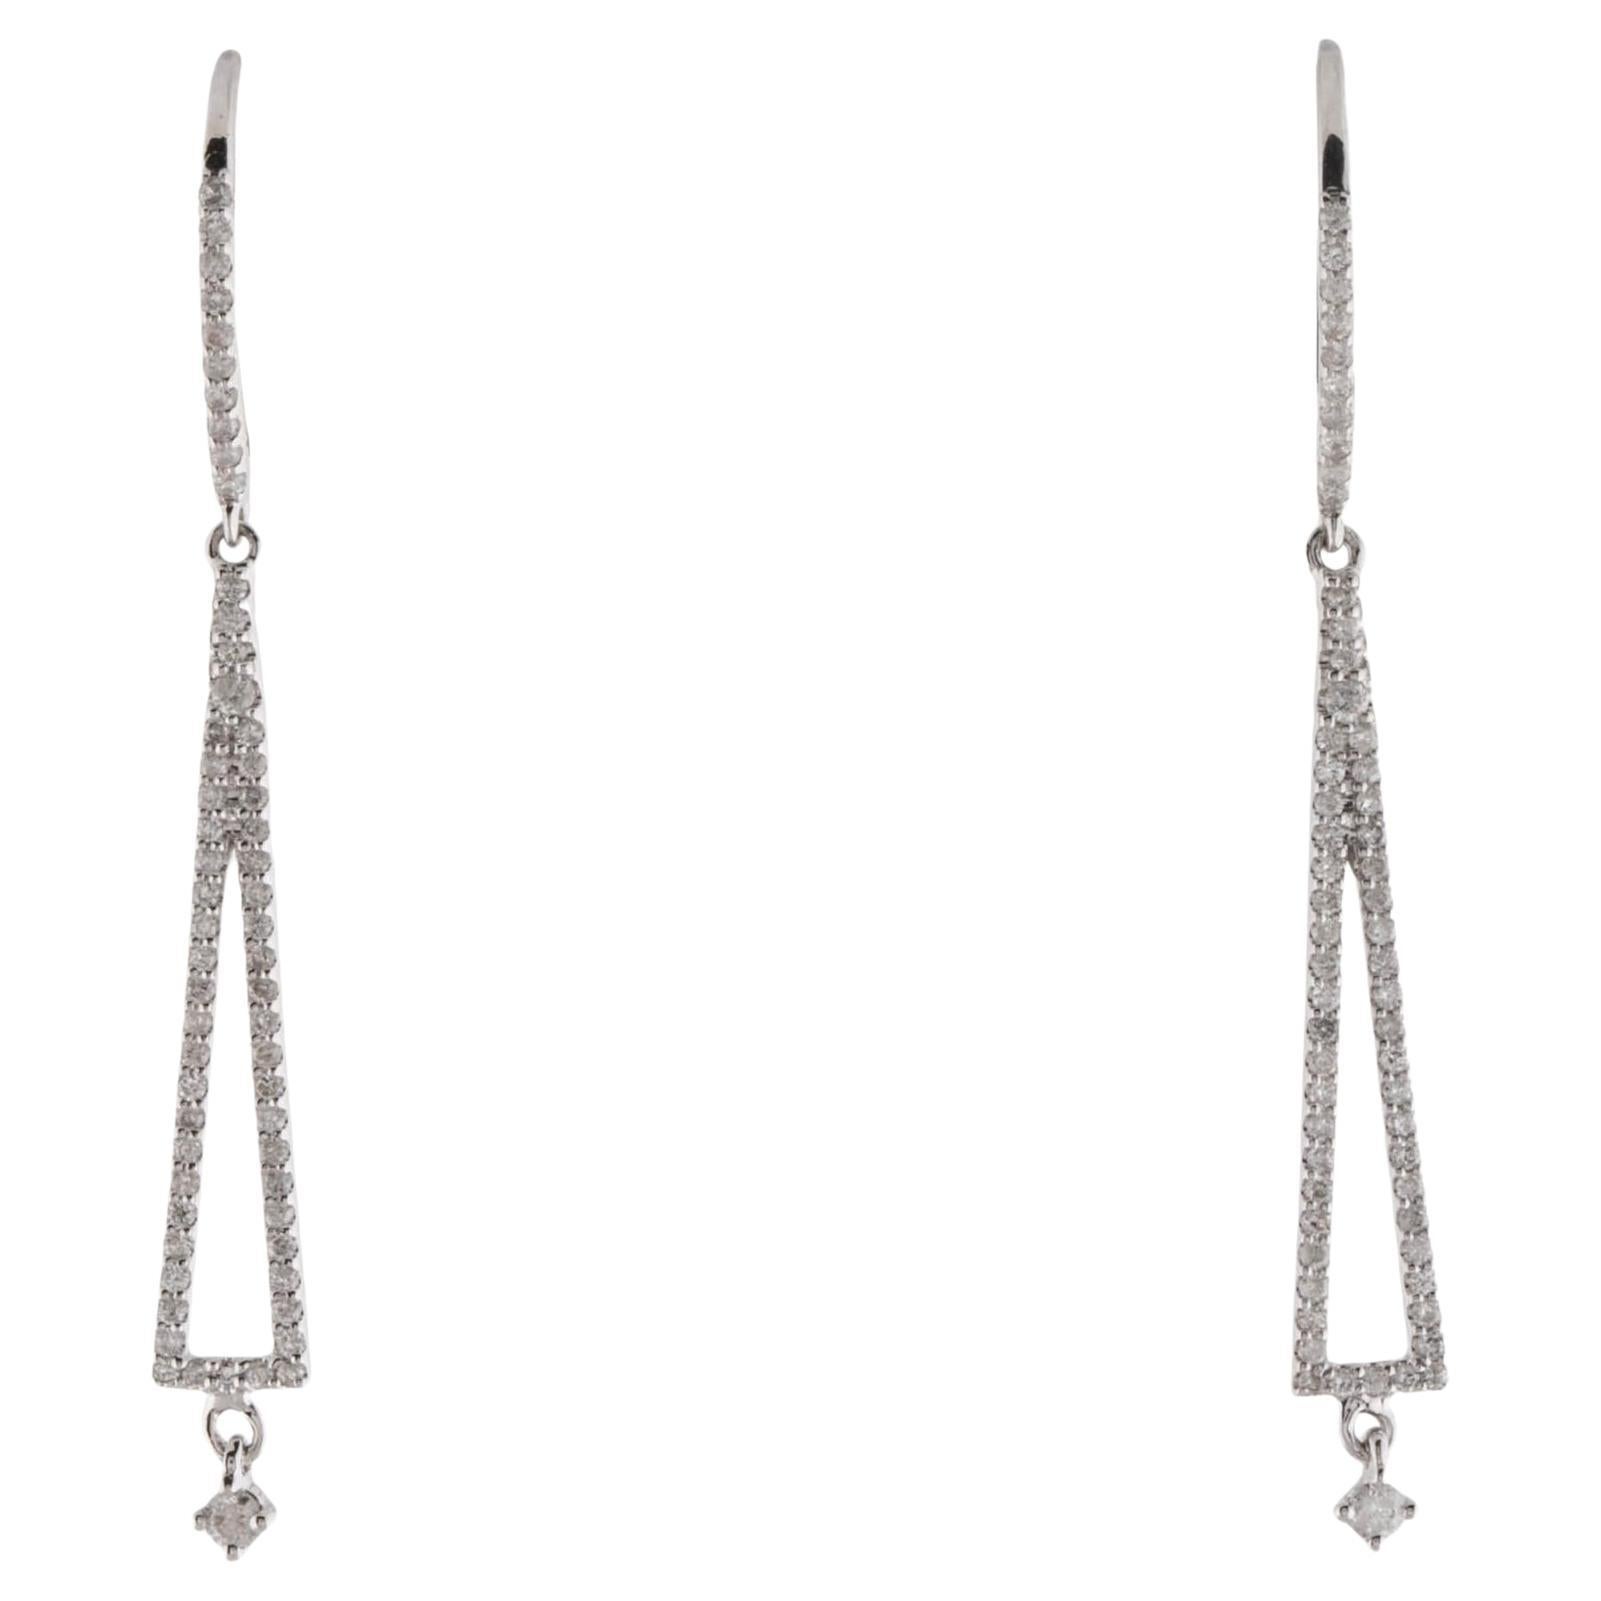 Luxurious 14K Diamond Drop Earrings - Exquisite Jewelry Style, Timeless Elegance